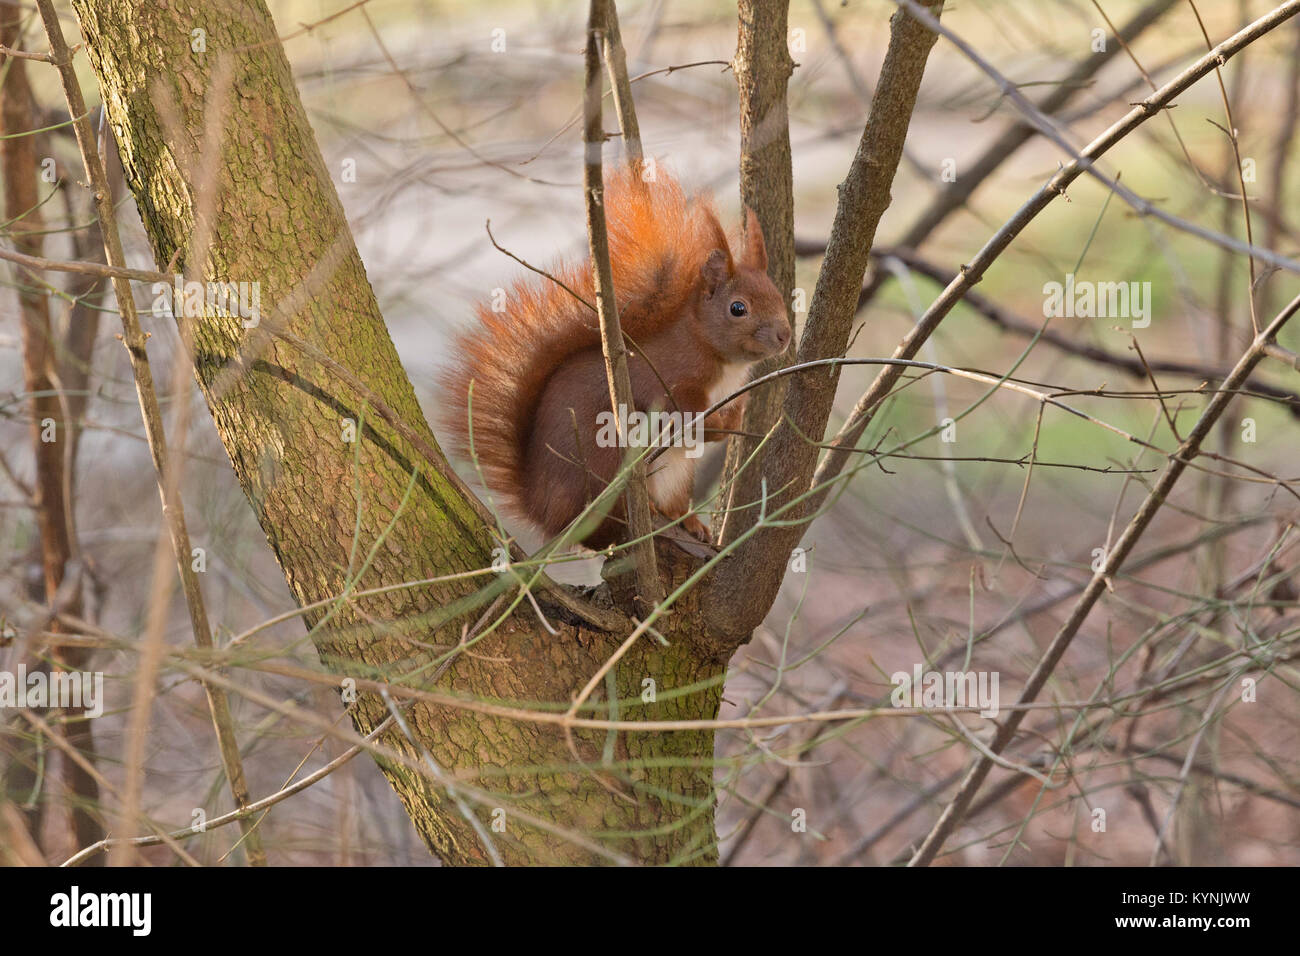 squirrel in a tree, Wilhelmsburg, Hamburg, Germany Stock Photo